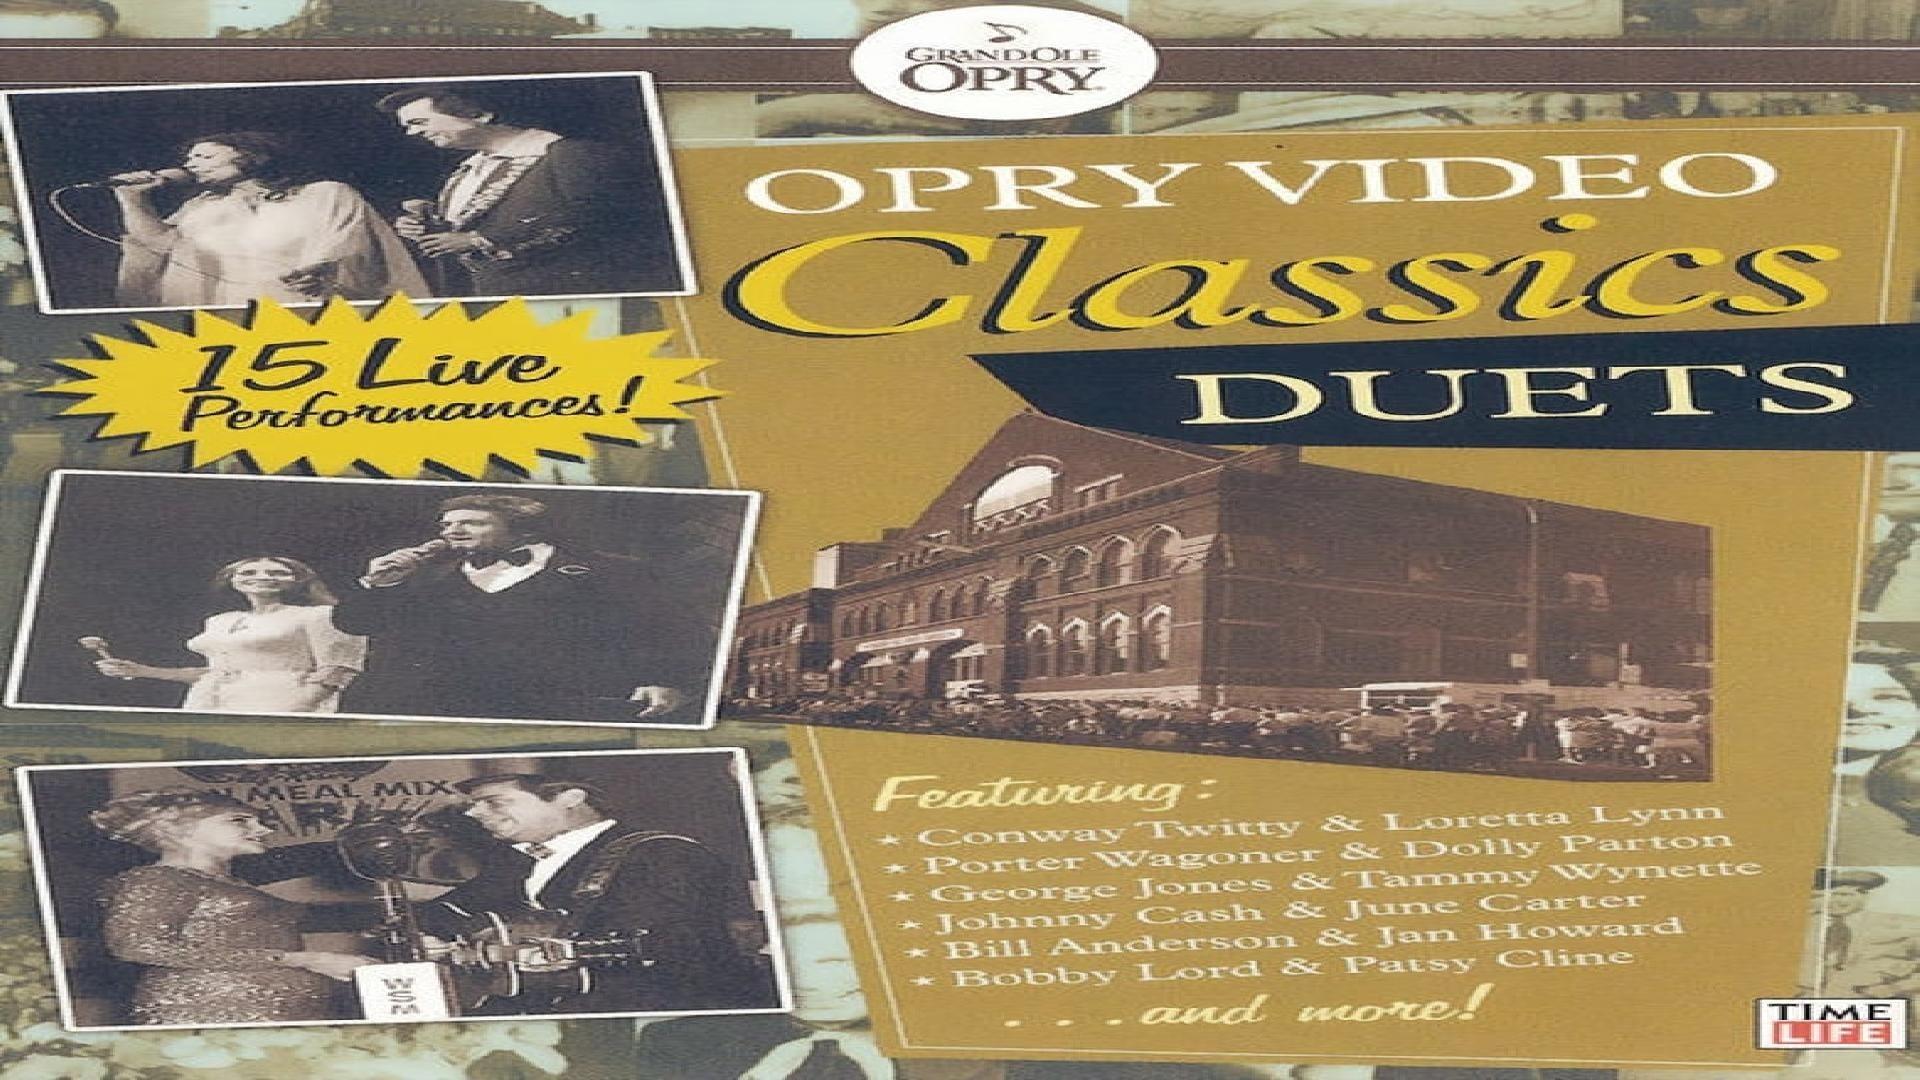 Opry Video Classics: Duets backdrop